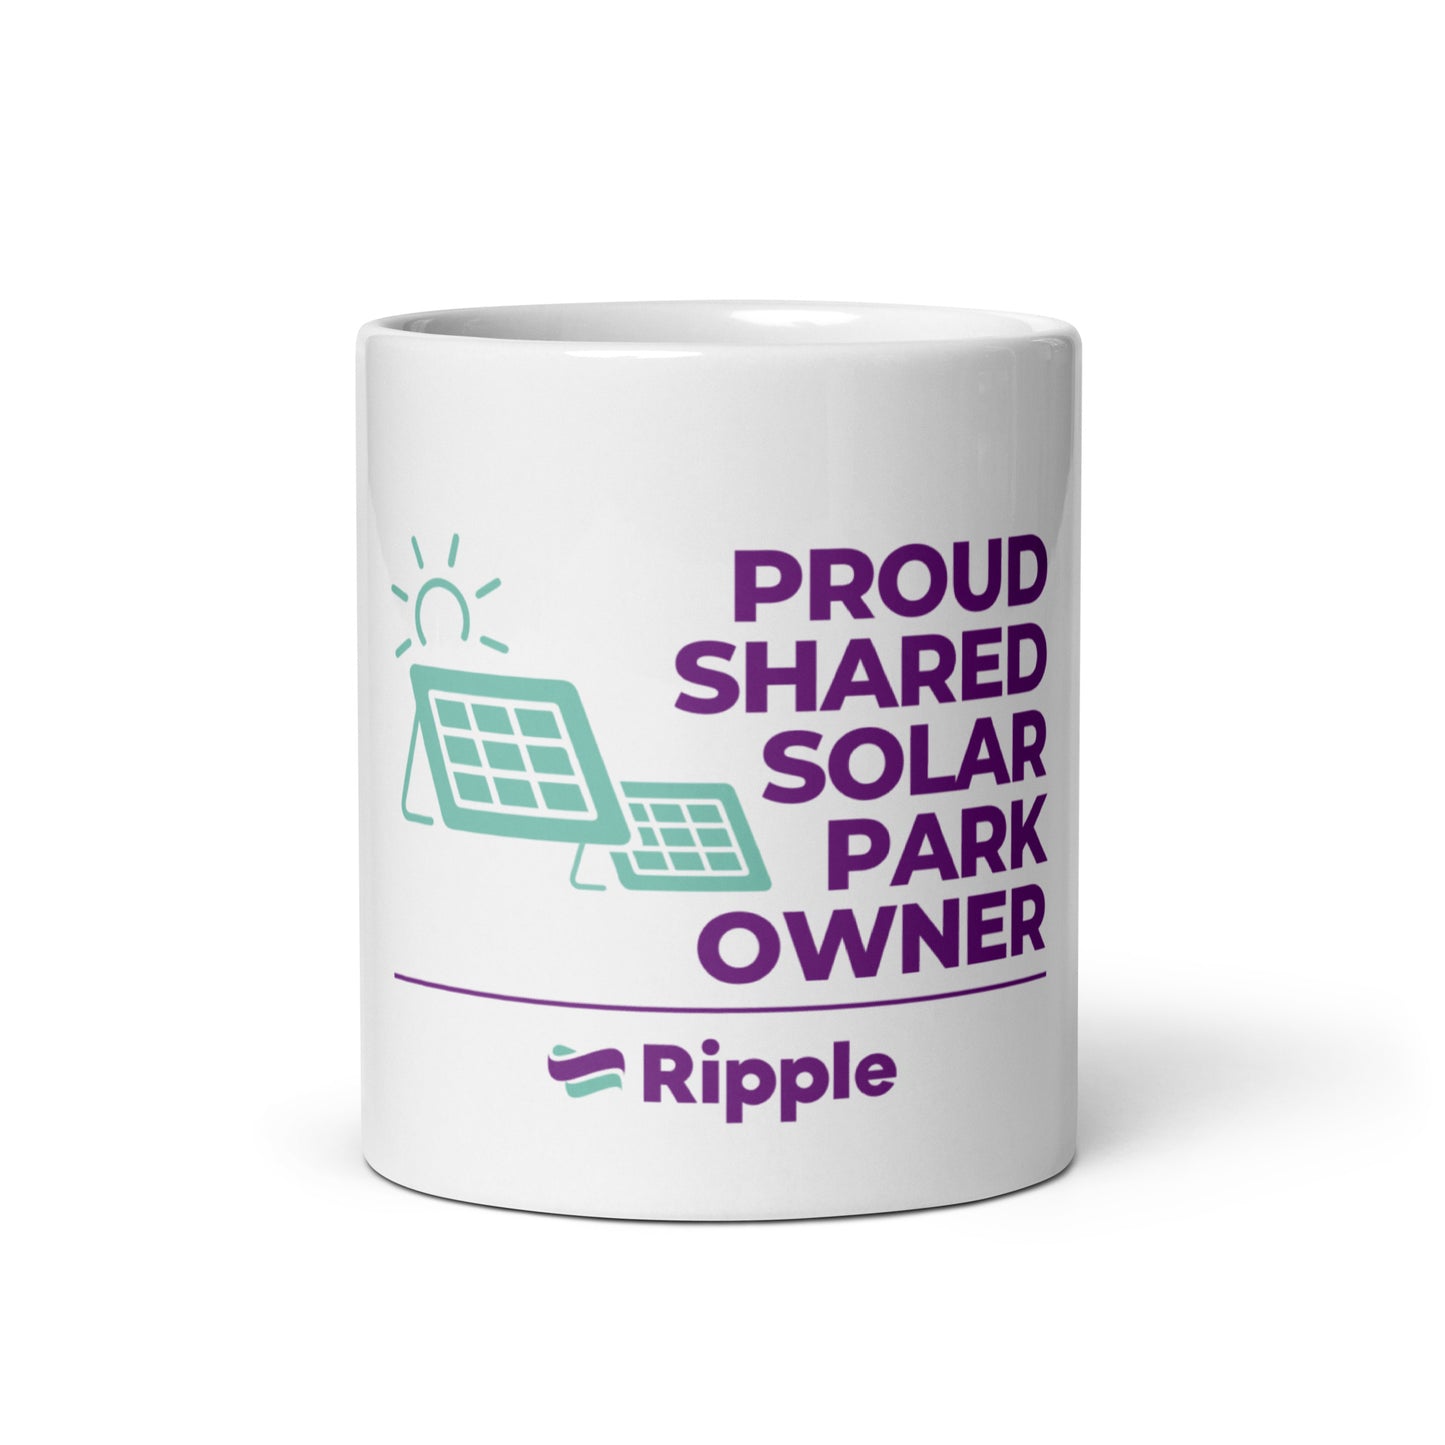 Proud shared solar park owner mug